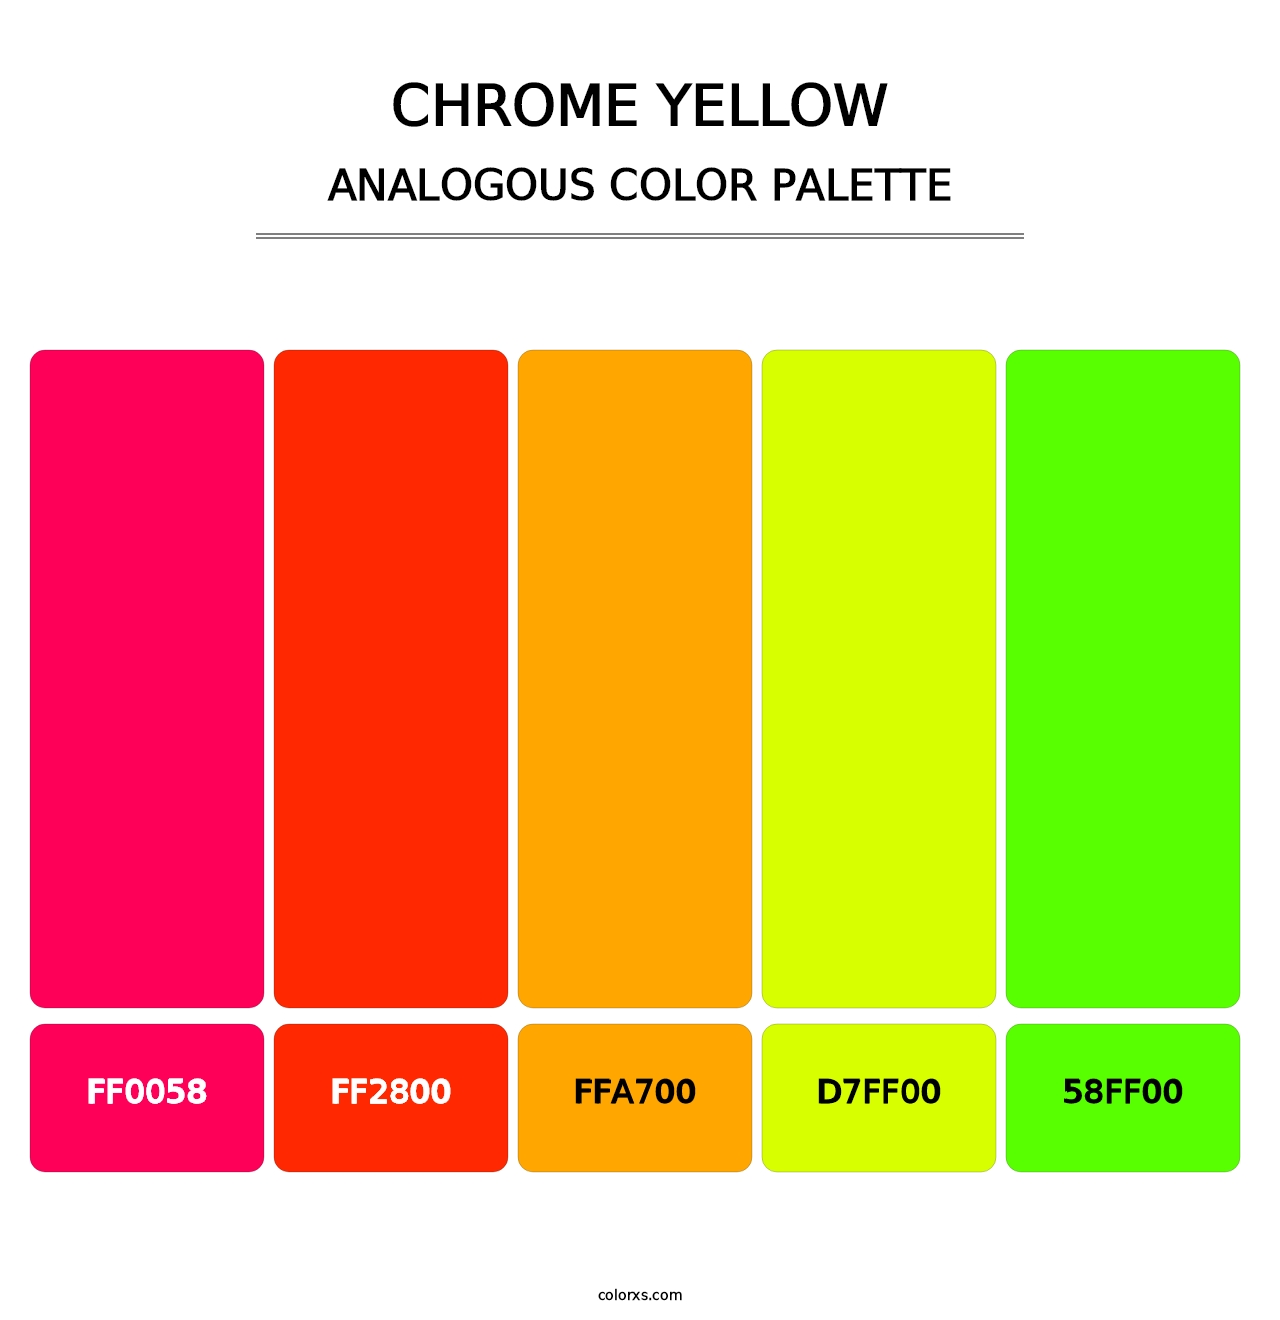 Chrome Yellow - Analogous Color Palette